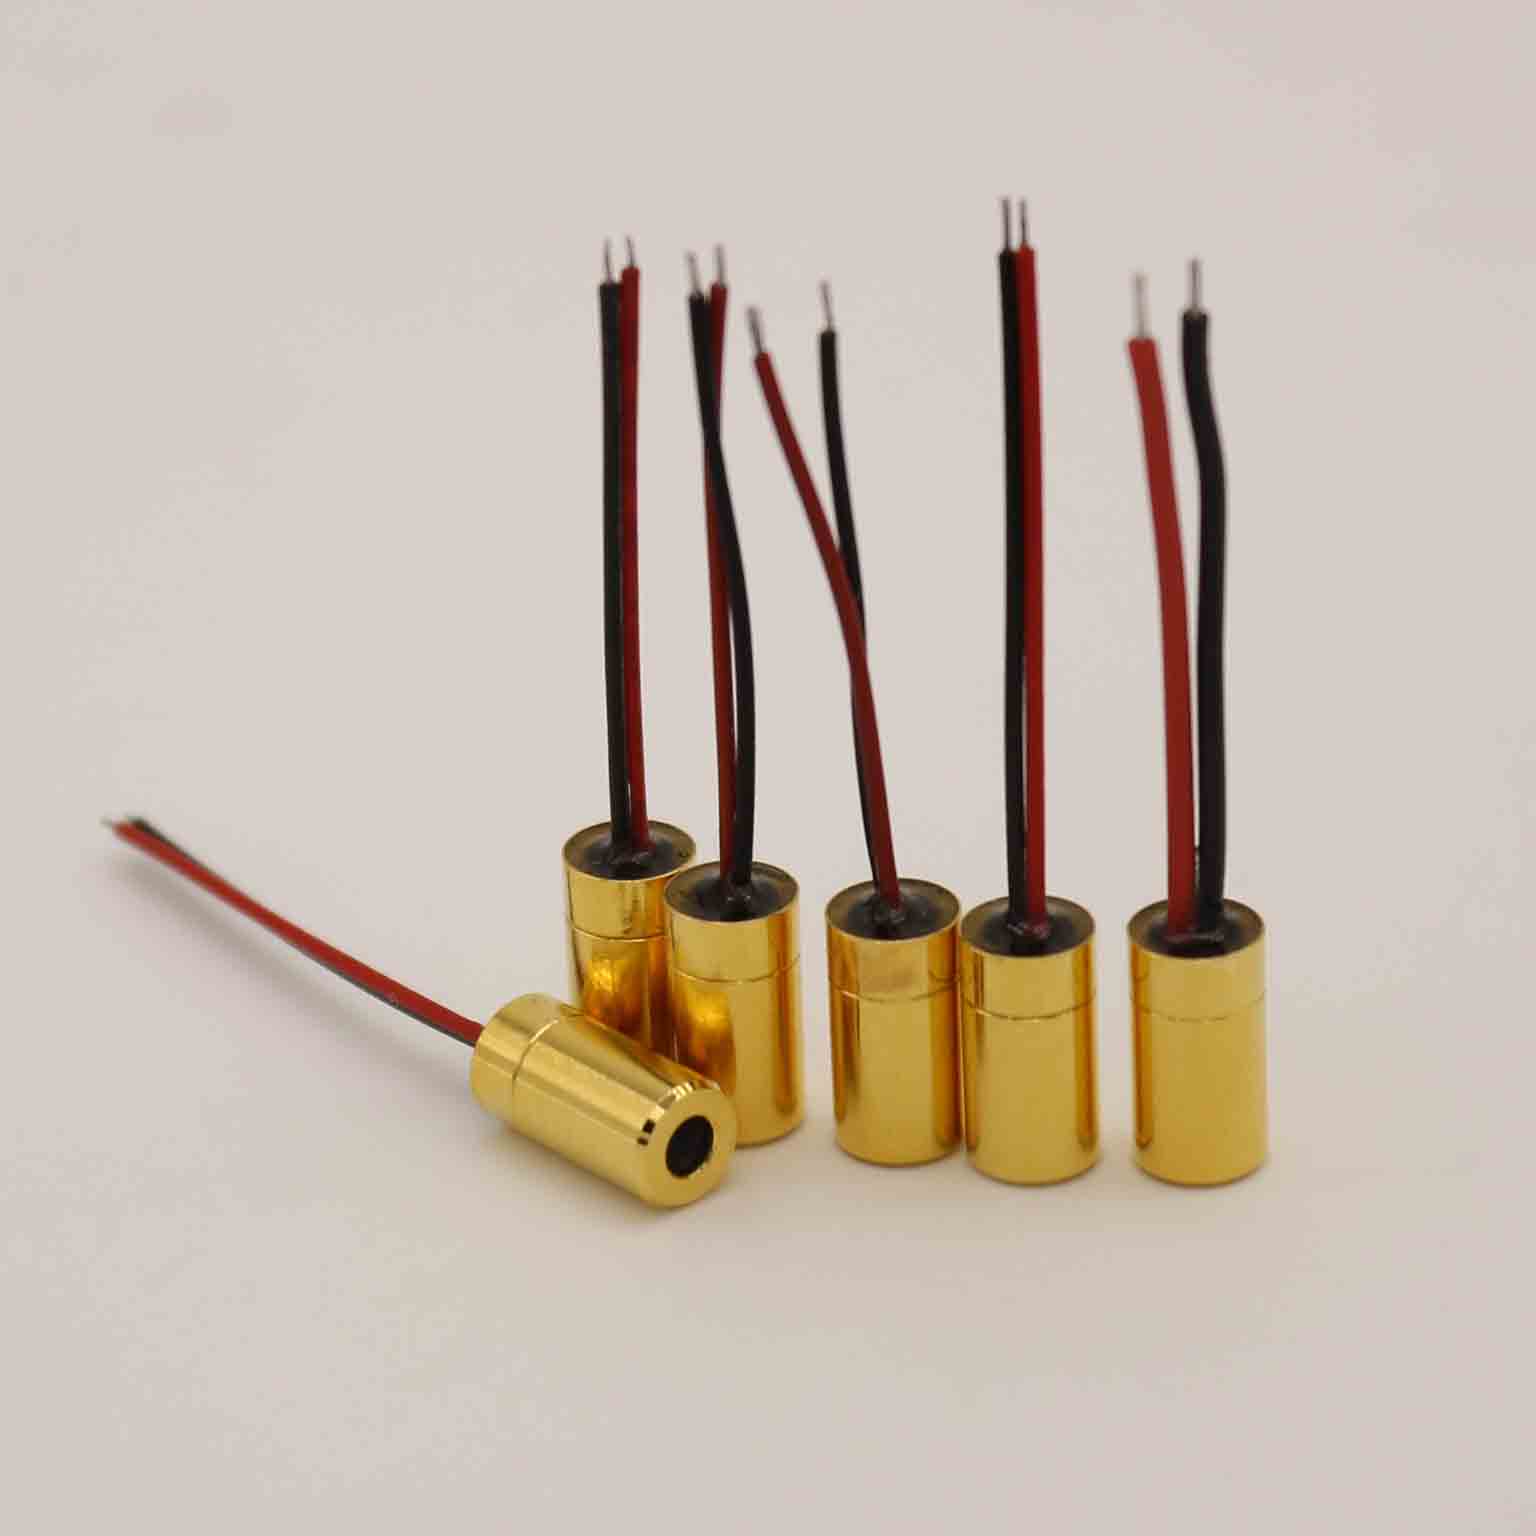 Moduli di diodi laser rossi a bassa potenza 650nm 5mw Modulo laser di classe IIIA per piccoli strumenti laser